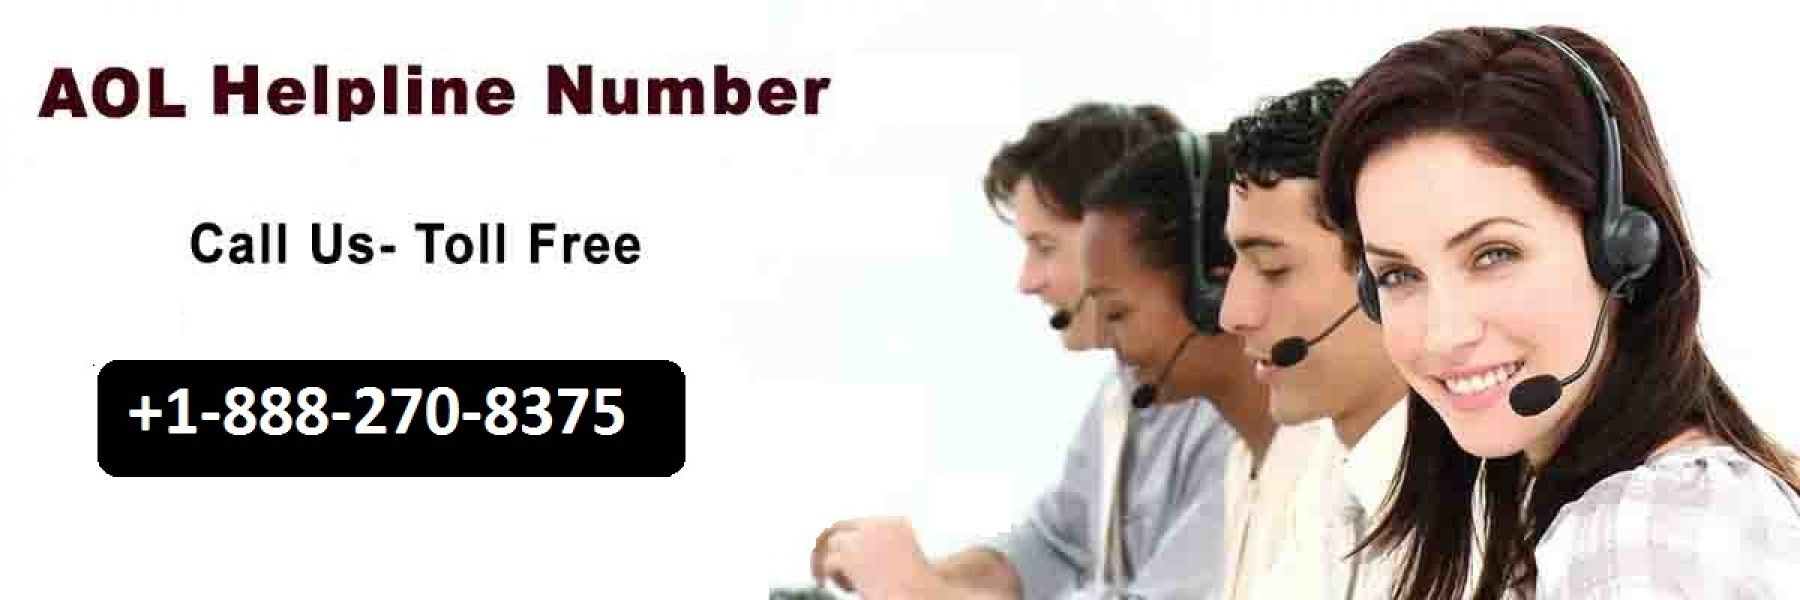 AOL CUSTOMER SERVICE NUMBER 888-270-8375